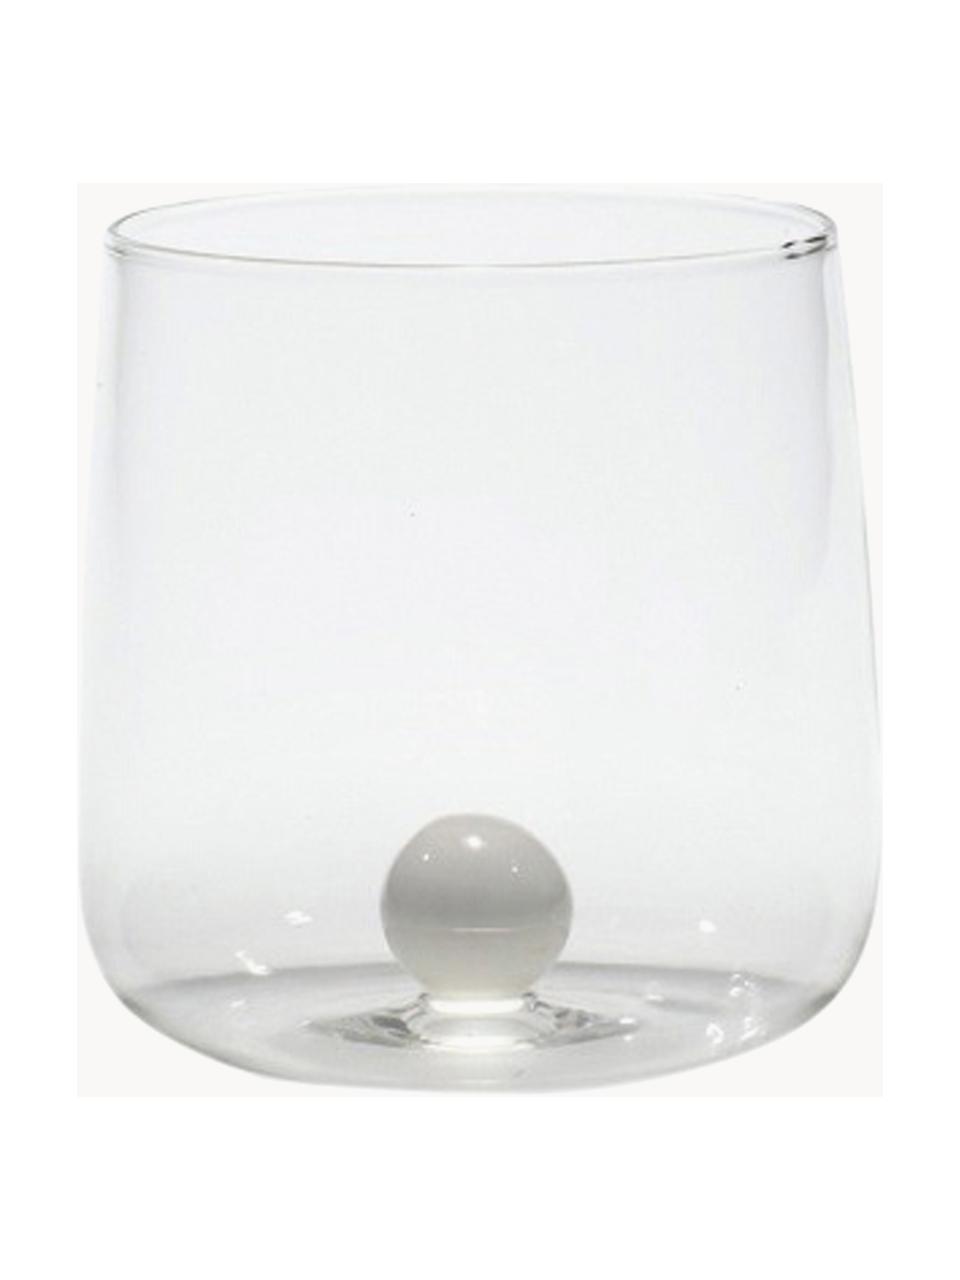 Mundgeblasene Wassergläser Bilia, 6 Stück, Borosilikatglas, Transparent, Weiß, Ø 9 x H 9 cm, 440 ml